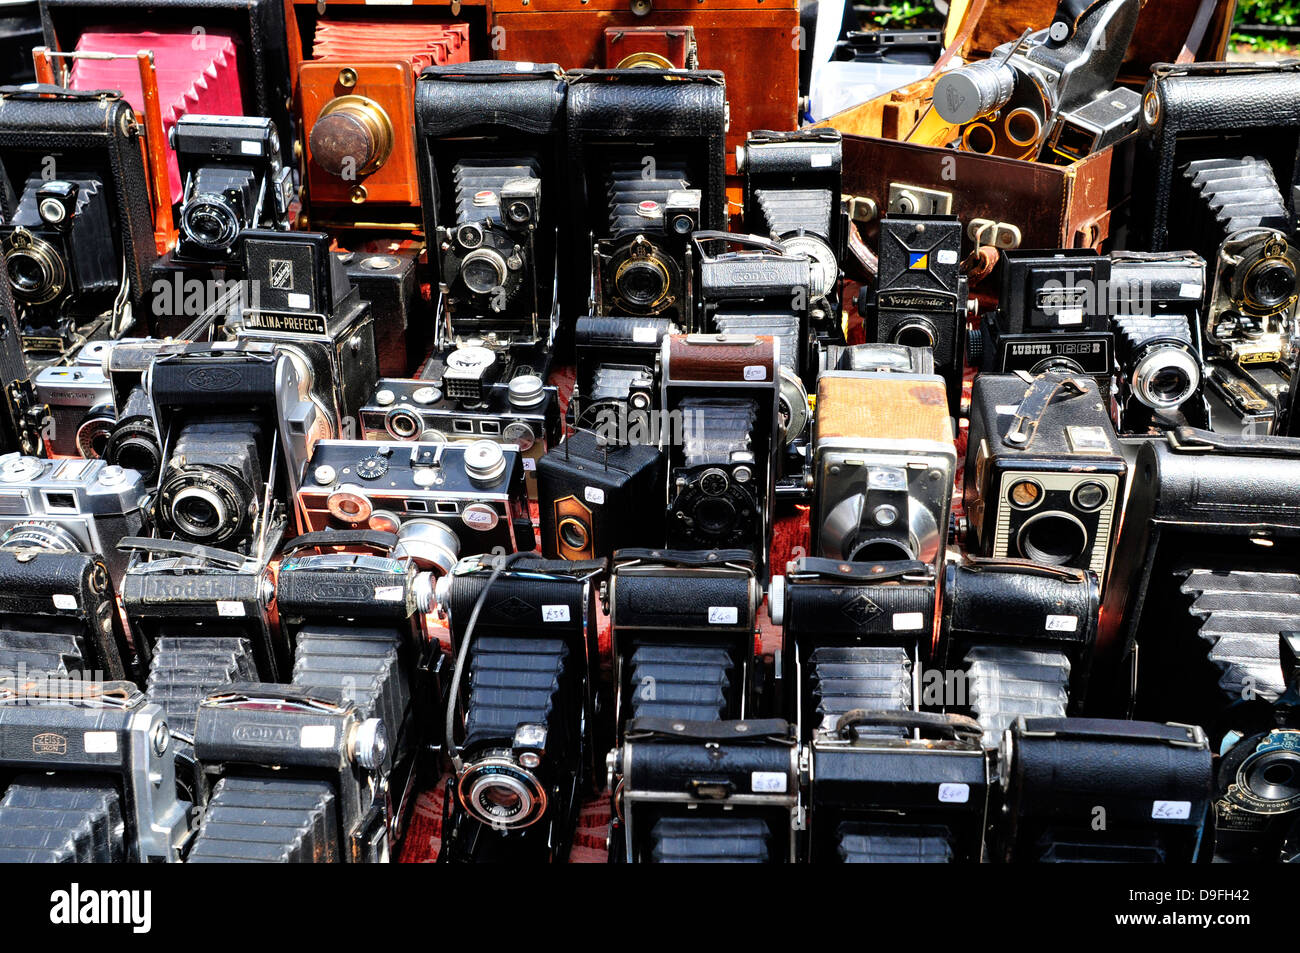 Vintage analog cameras on display, Poertobello Road market, London Stock Photo